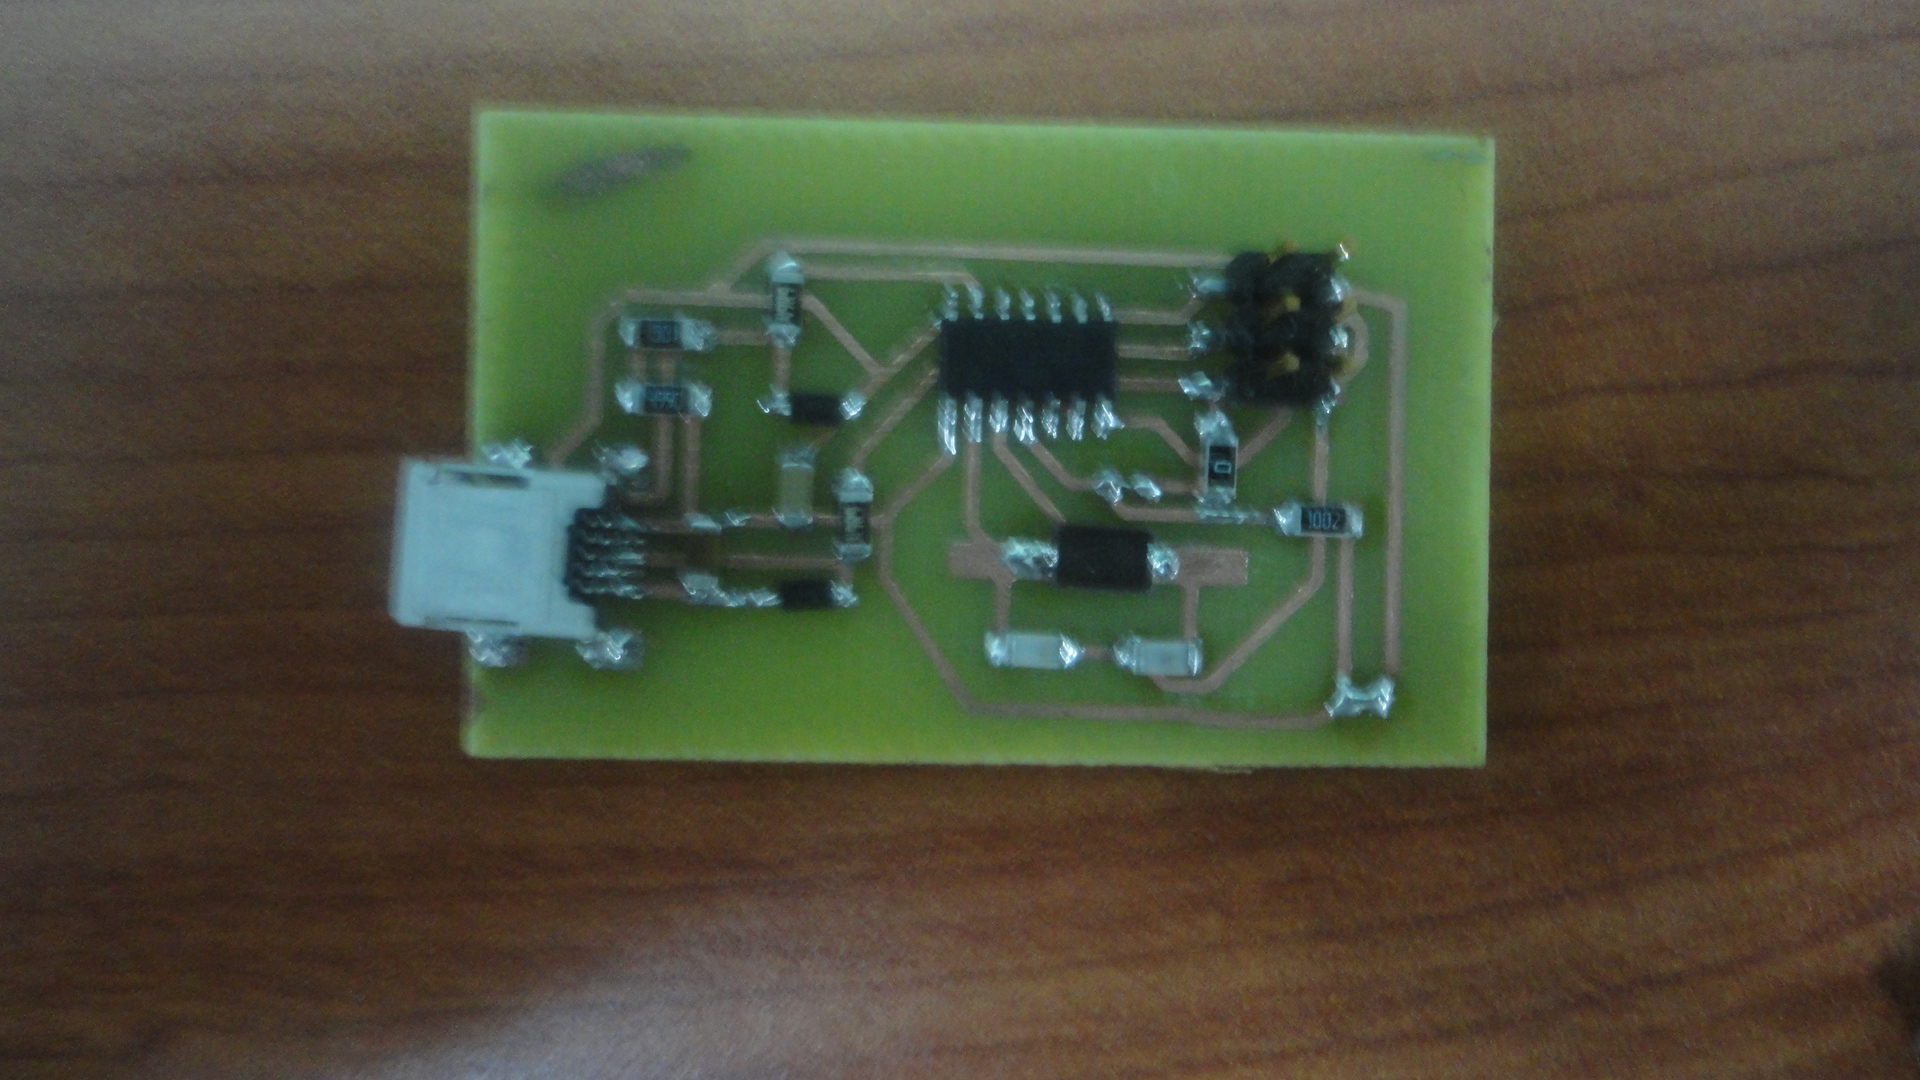 soldered_pcb